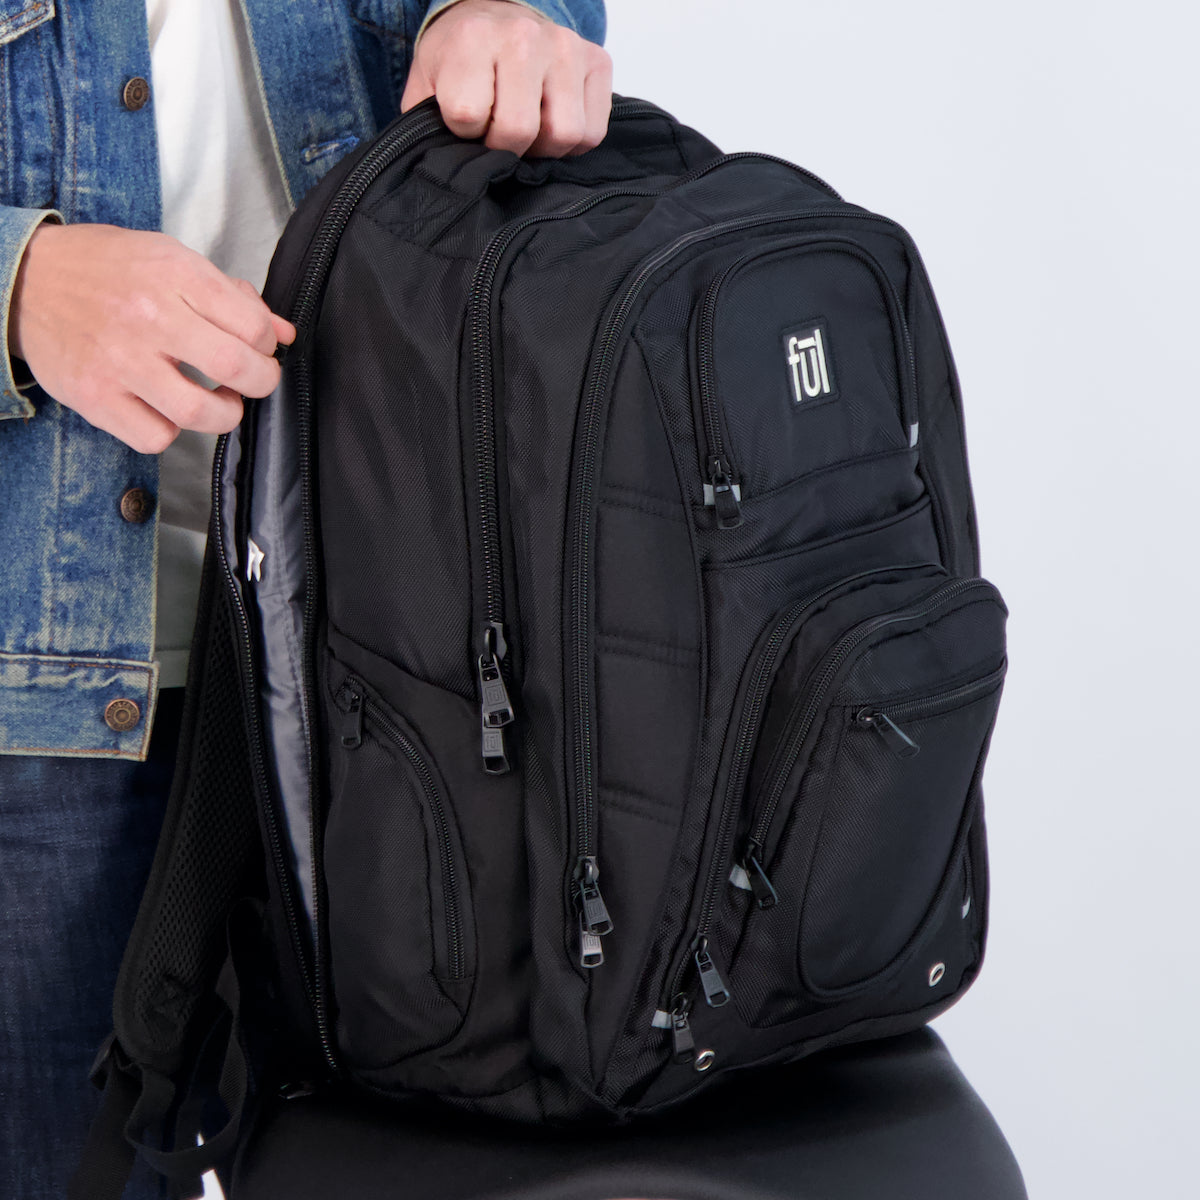 Black backpack the essential bag